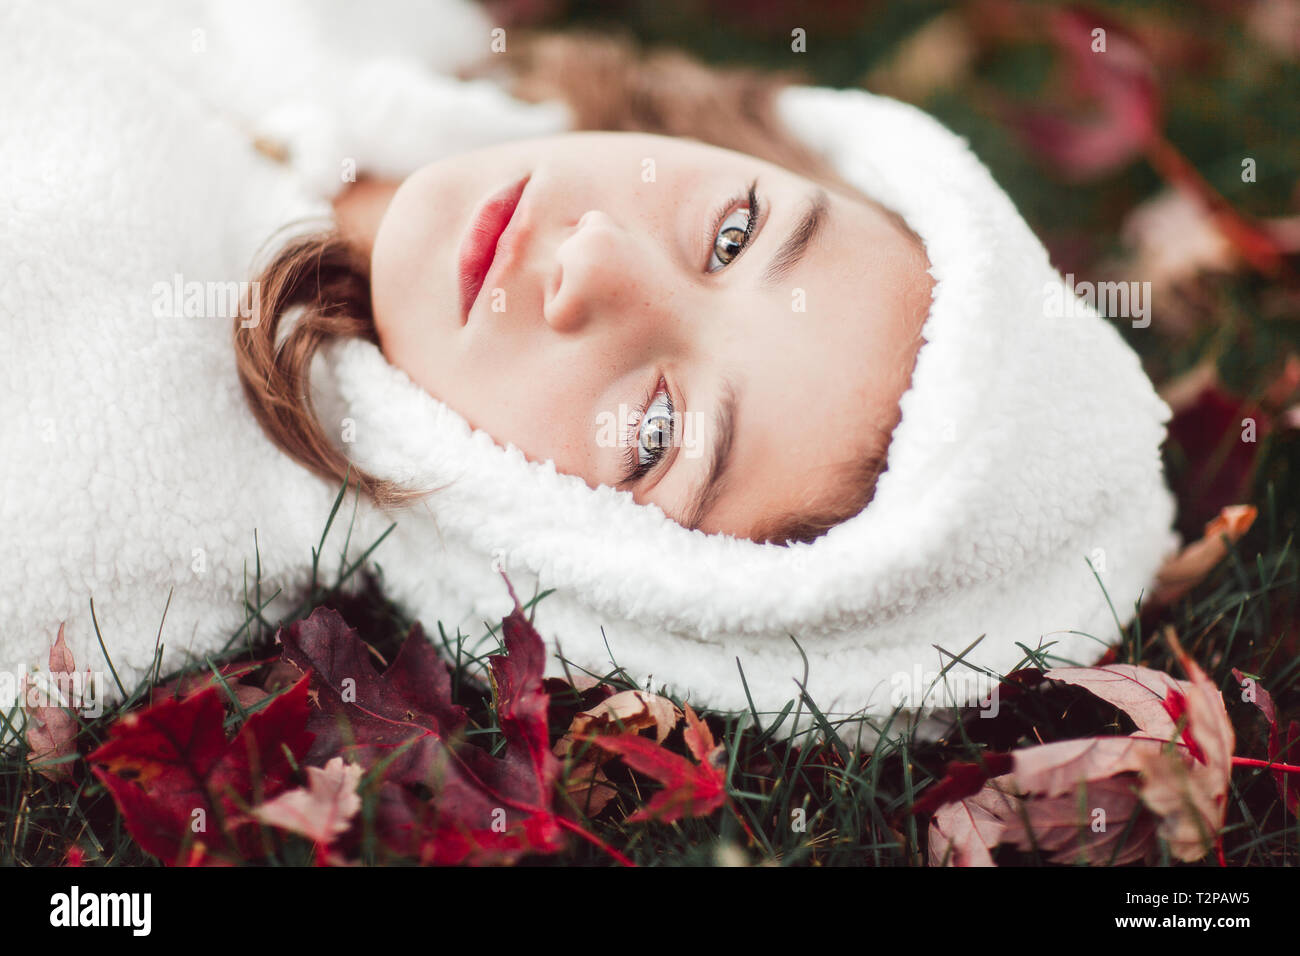 Girl in white hooded top lying on grass amongst autumn leaves, portrait Stock Photo